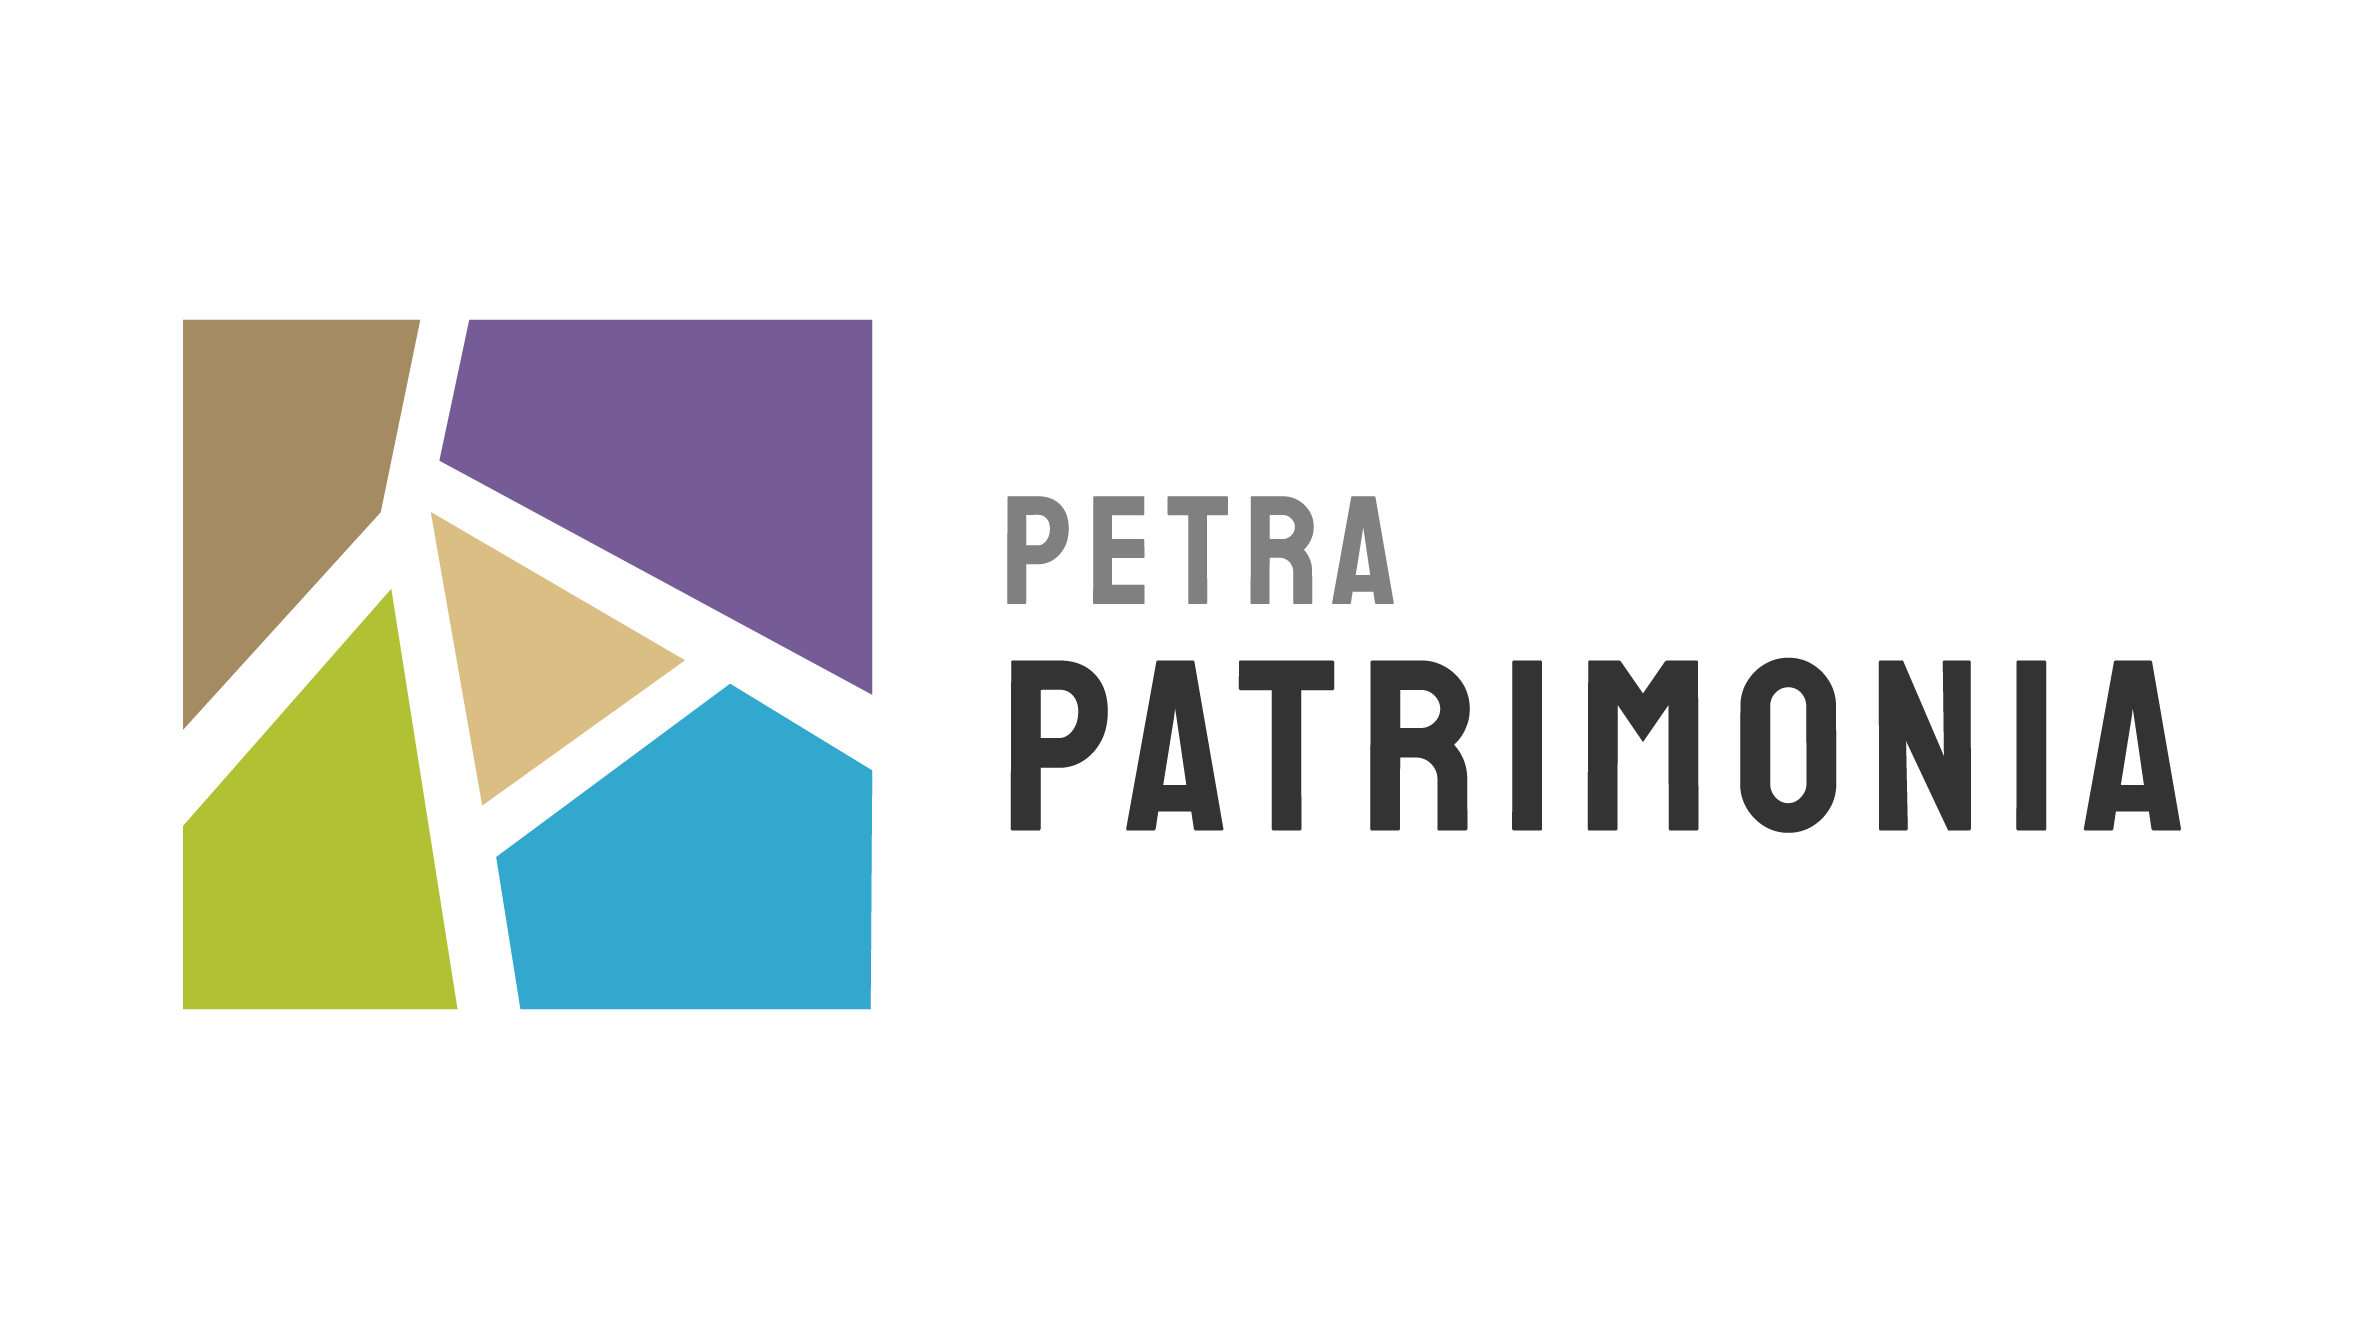 PETRA PATRIMONIA PARTENAIRES